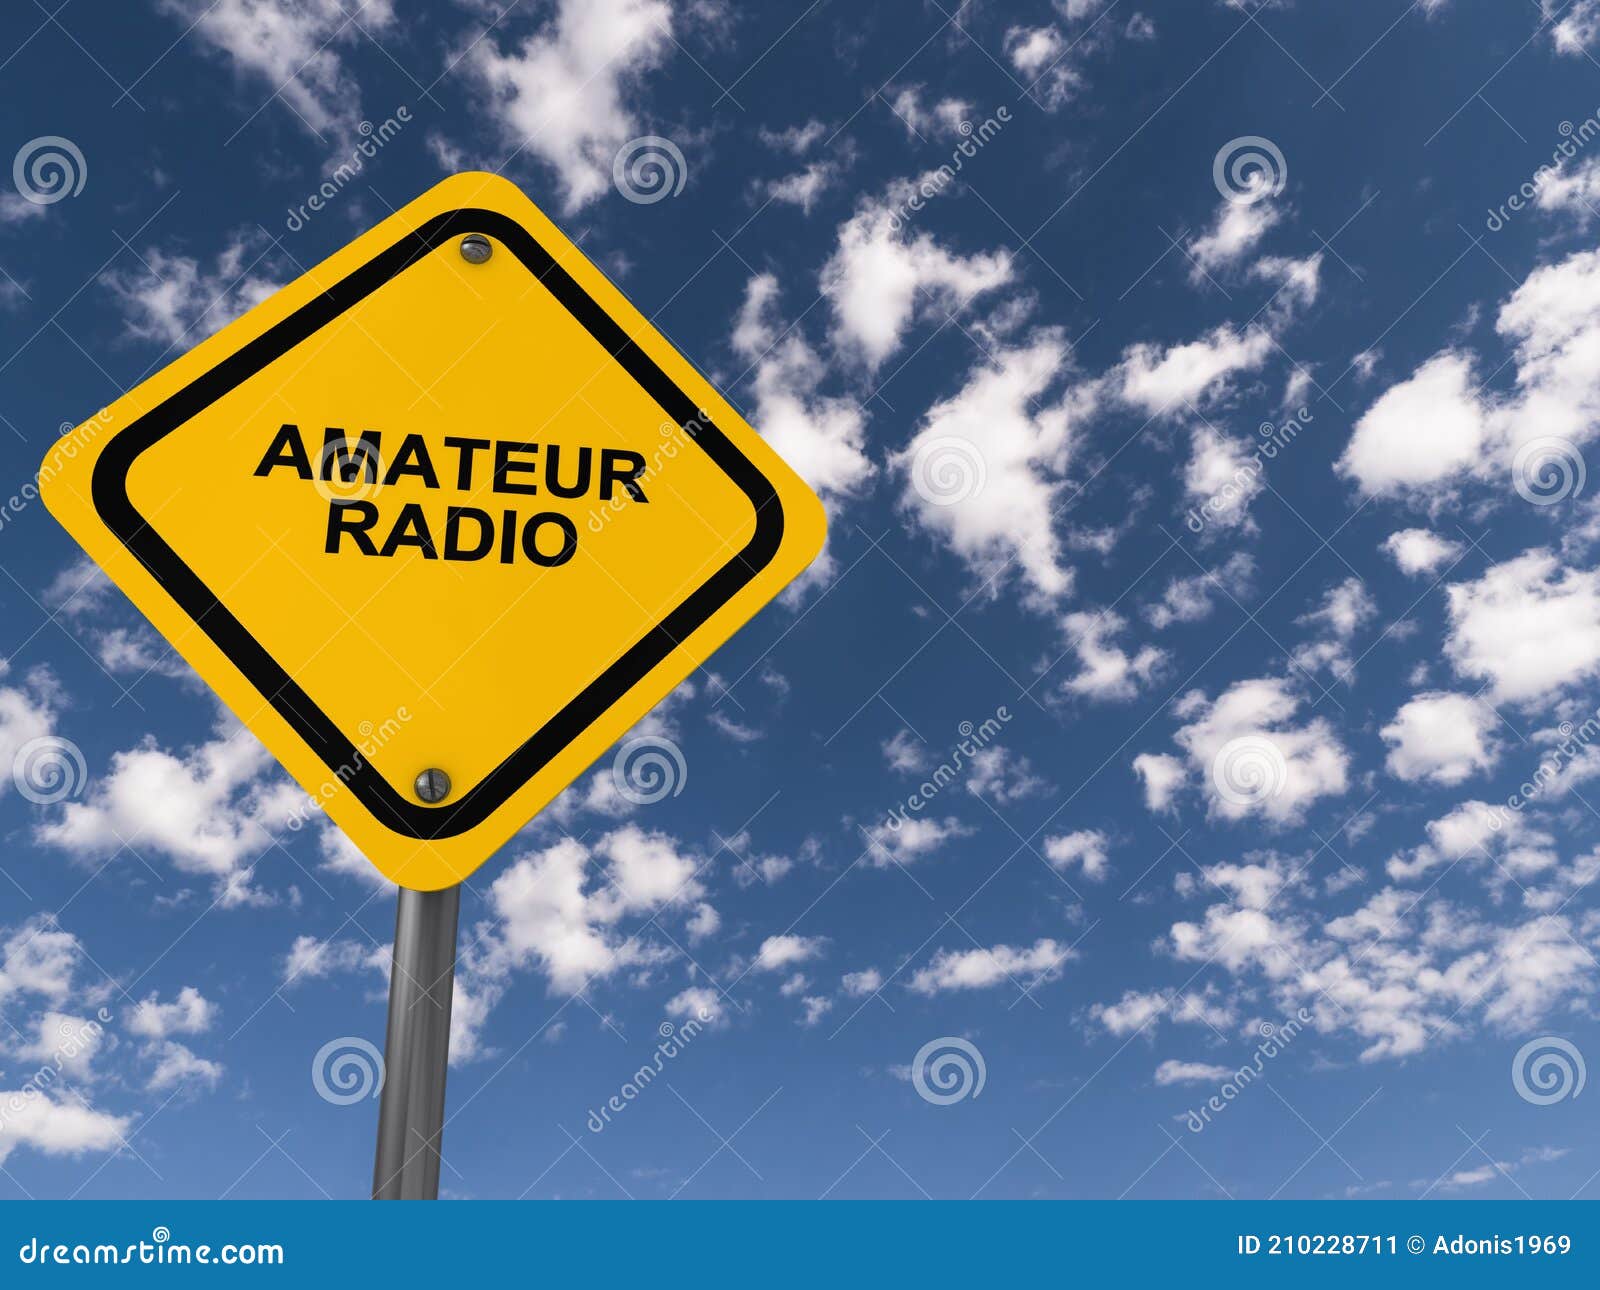 amateur radio traffic sign